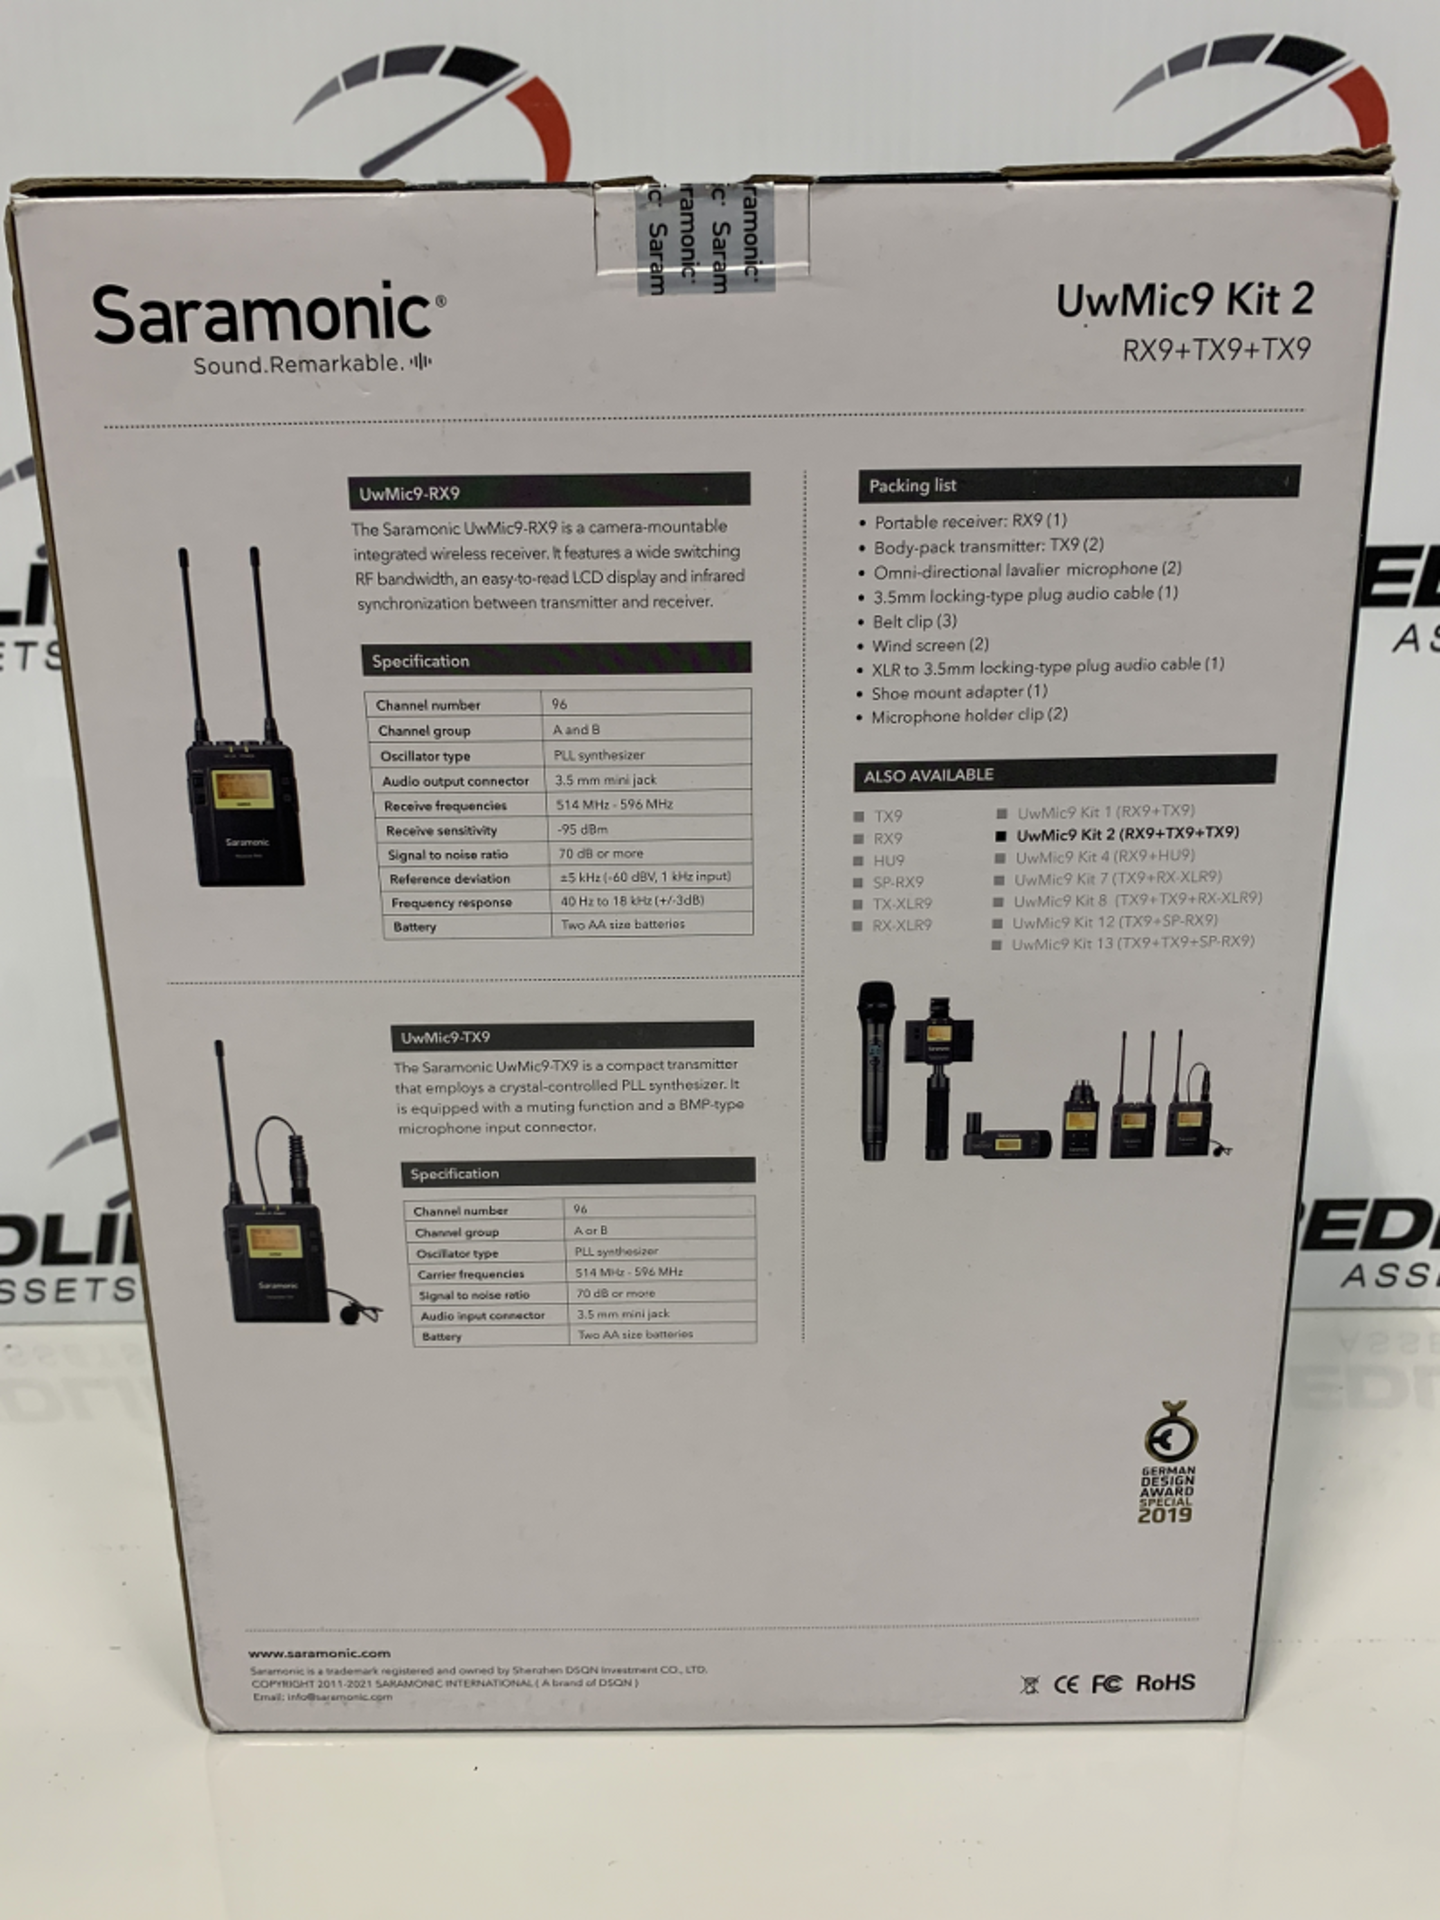 Saramonic - Microphone System - Model # Uw Mic9 kit 2 - Image 2 of 2